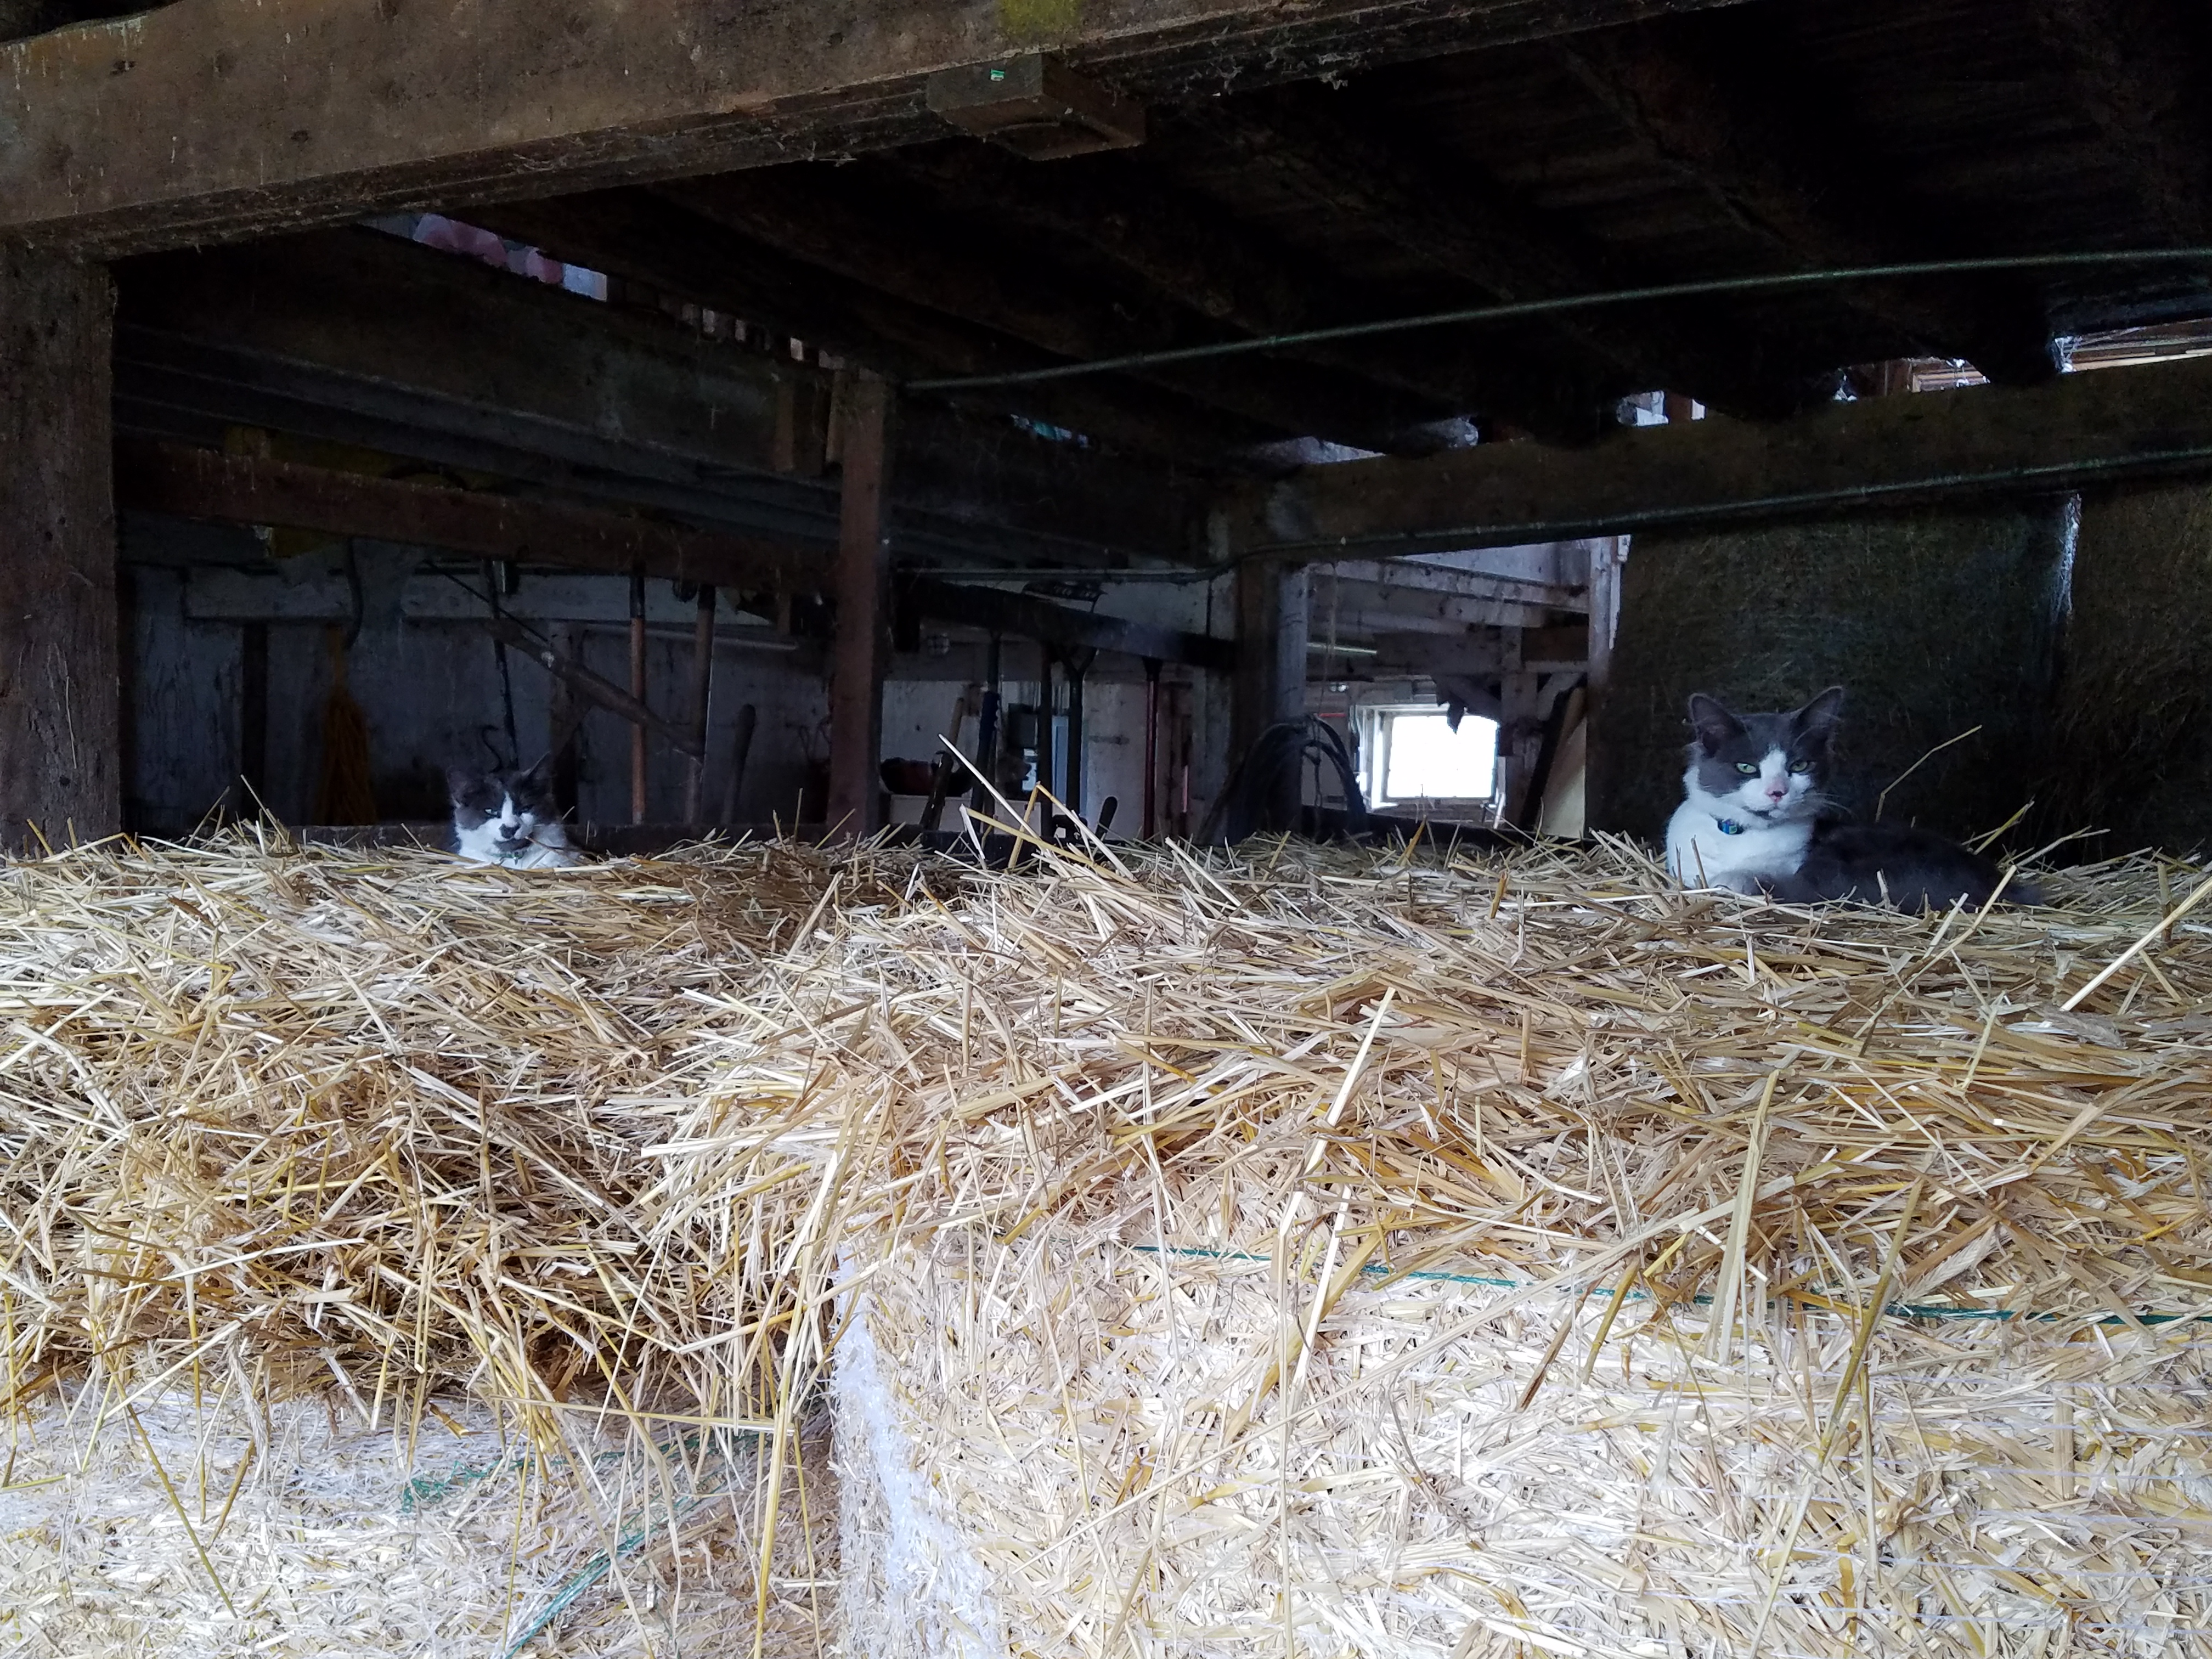 kittens on hay bales